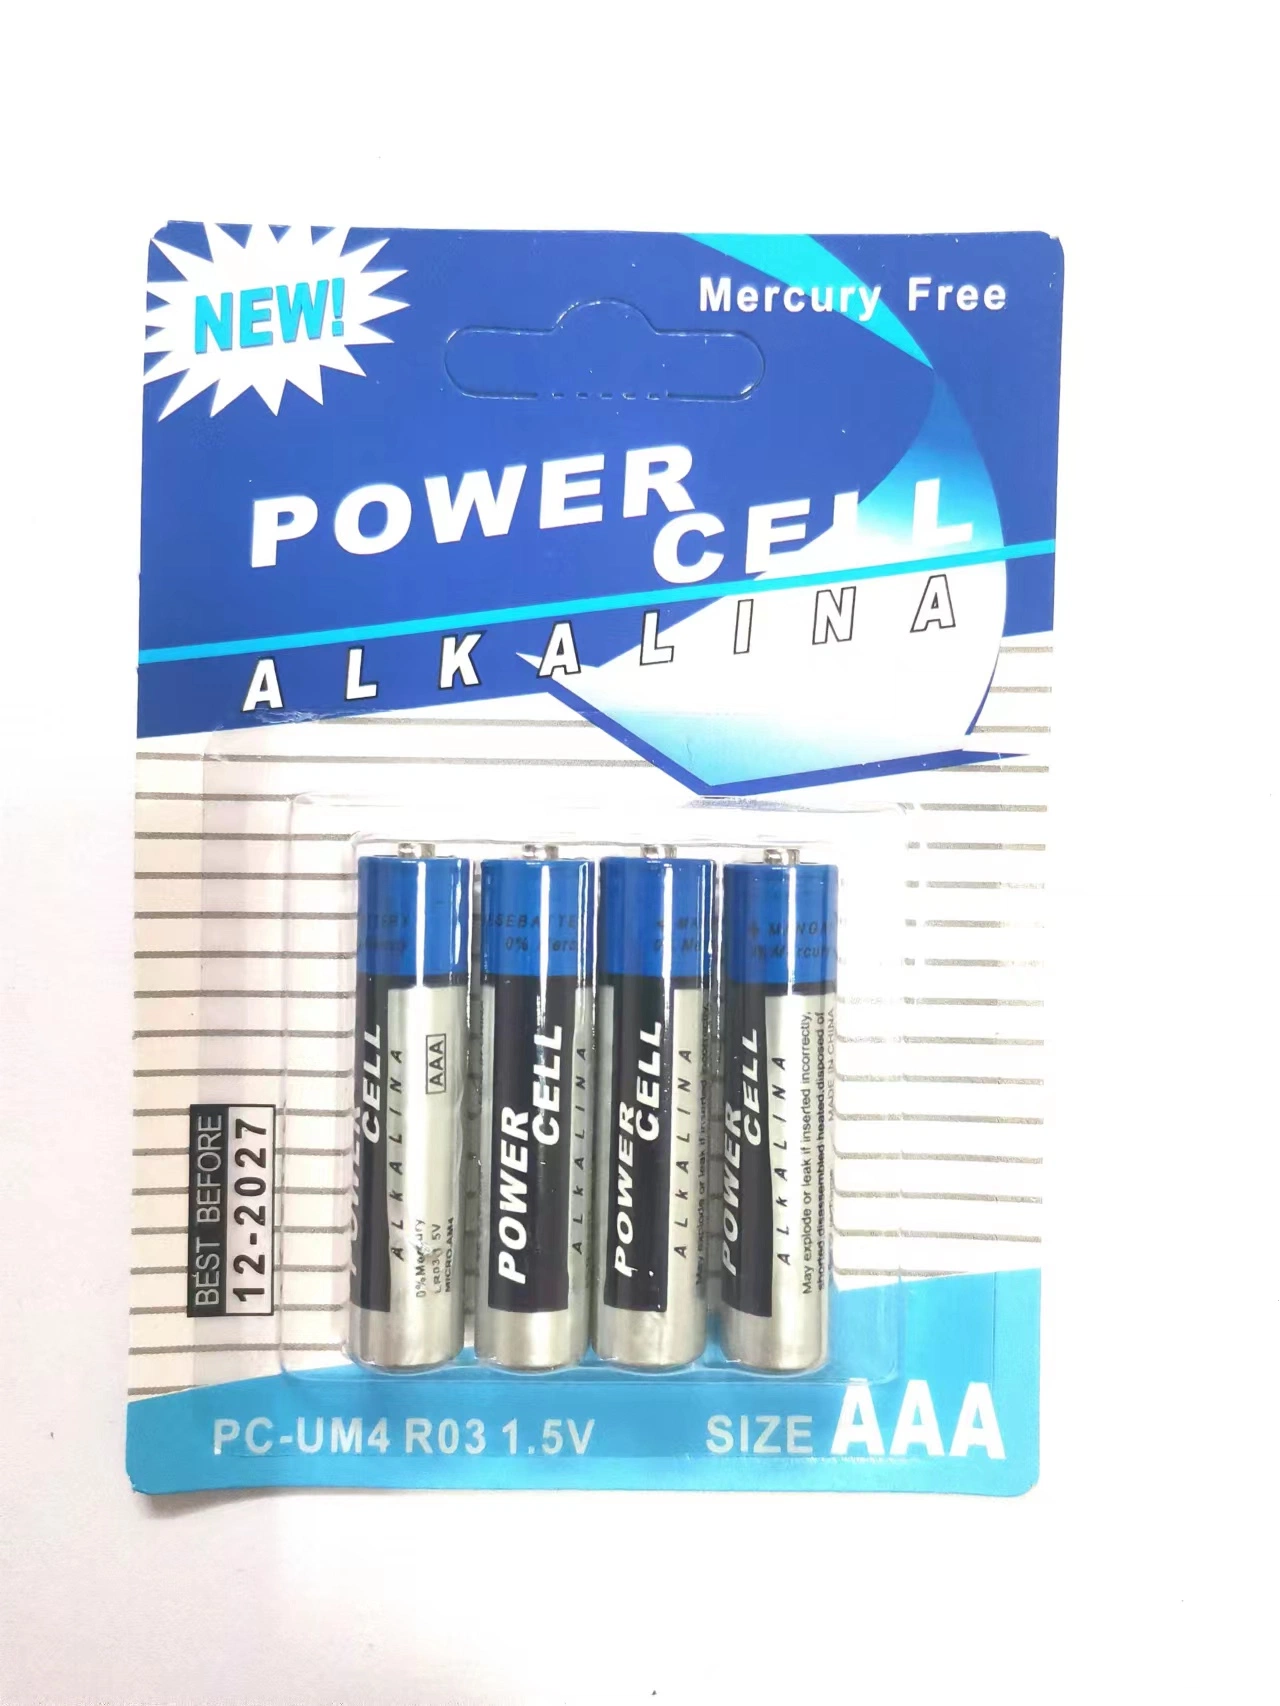 Potente preço barato Powercell AAA R03 um-4 1.5V carbono-zinco Bateria seca bateria bateria bateria primária bateria de carbono durante Eletrónica de consumo/controlo remoto C